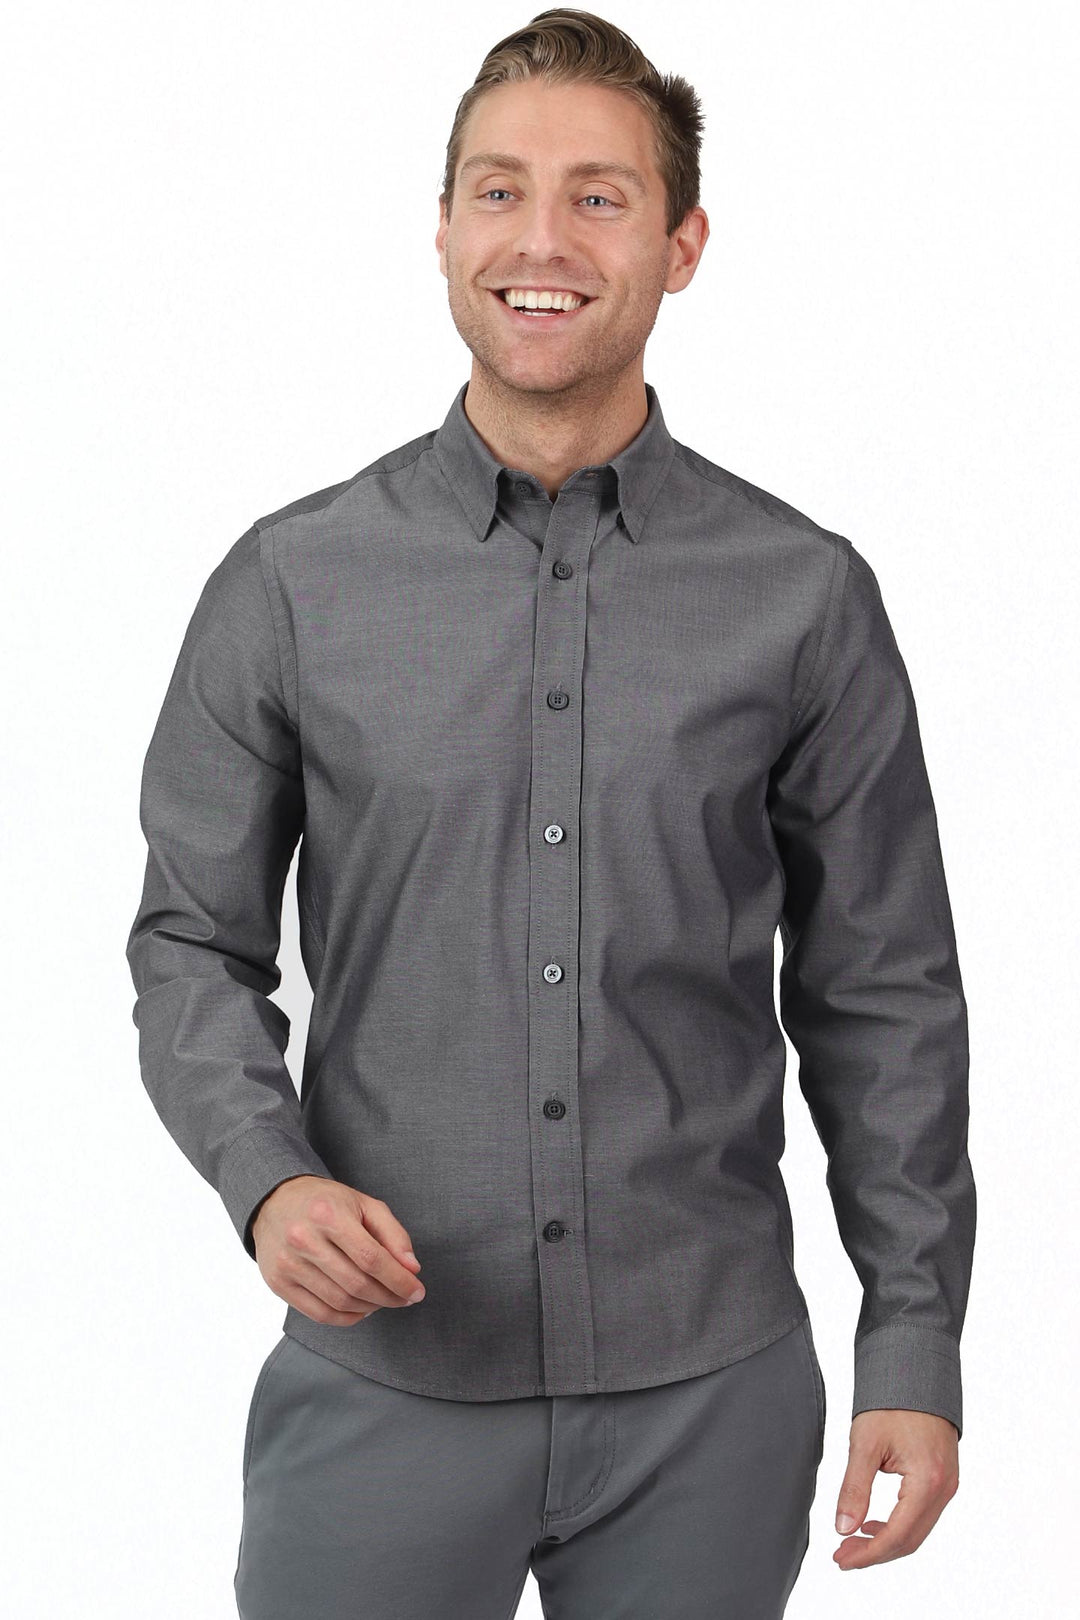 Buy Charcoal Stretch Button-Down Shirt for Short Men | Ash & Erie   Stretch Shirt